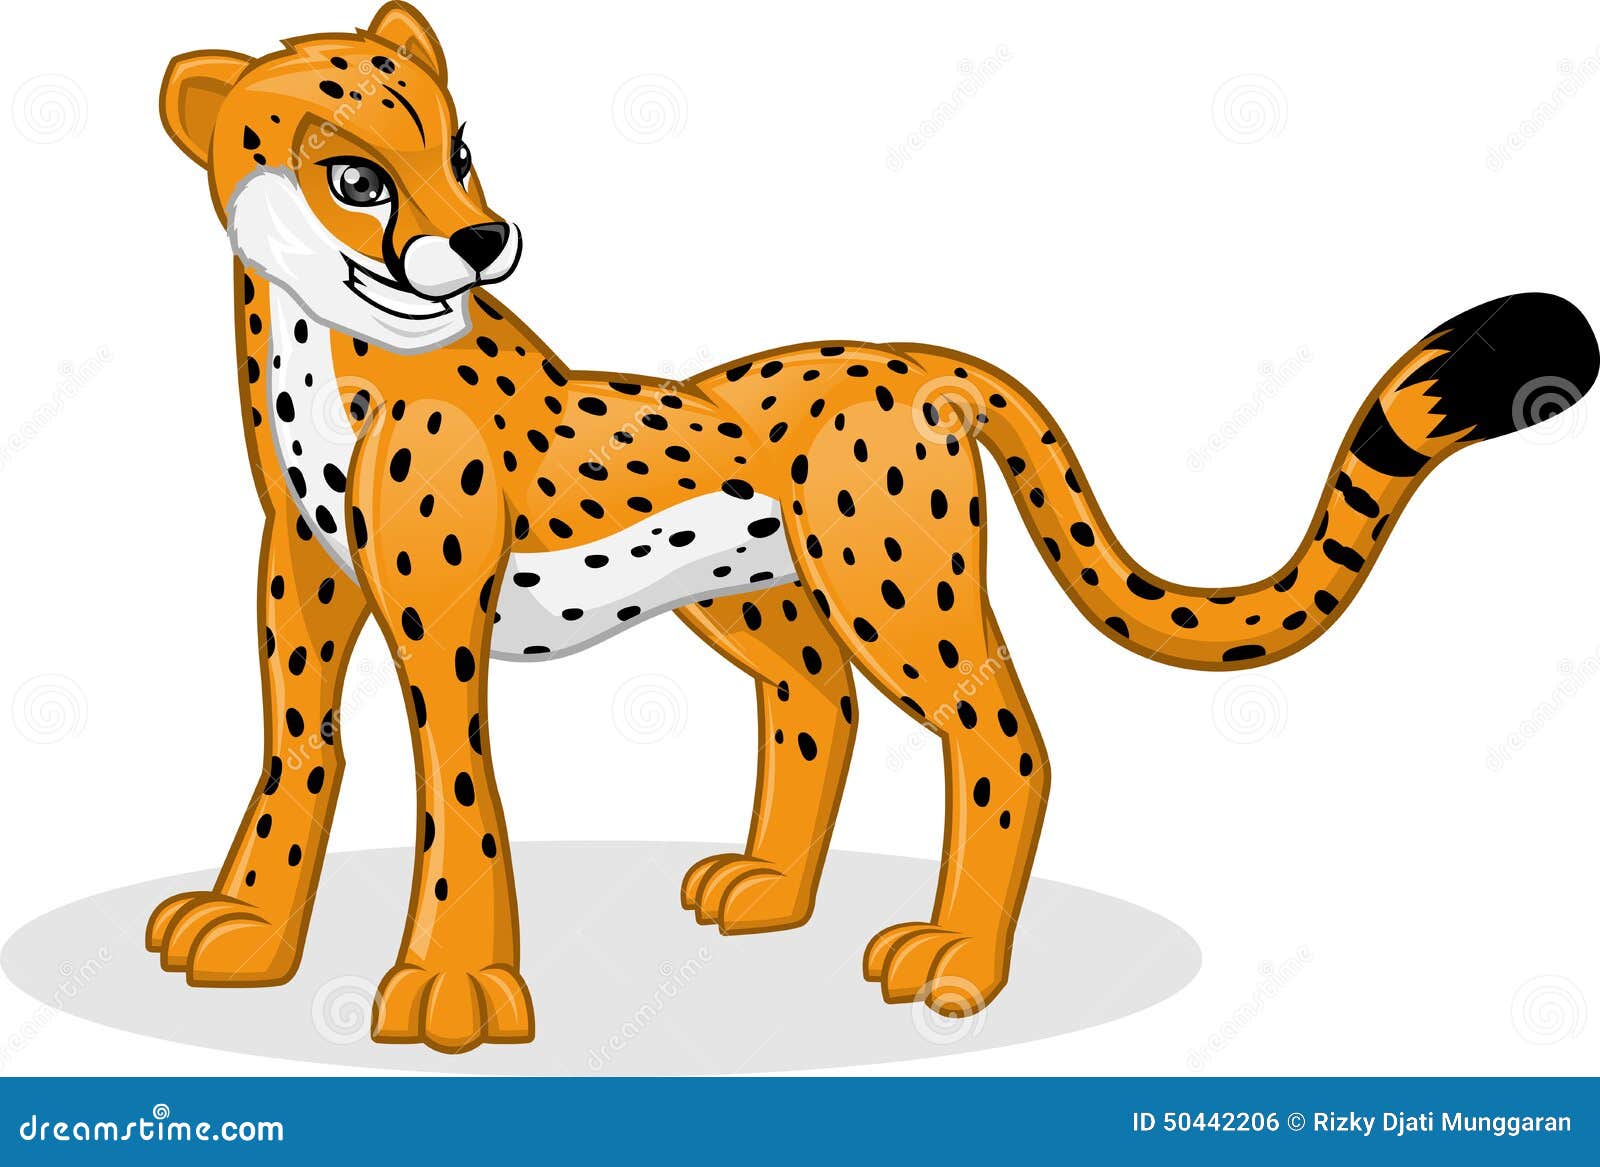 High Quality Cheetah Vector Cartoon Illustration Stock Vector -  Illustration of jaguar, character: 50442206